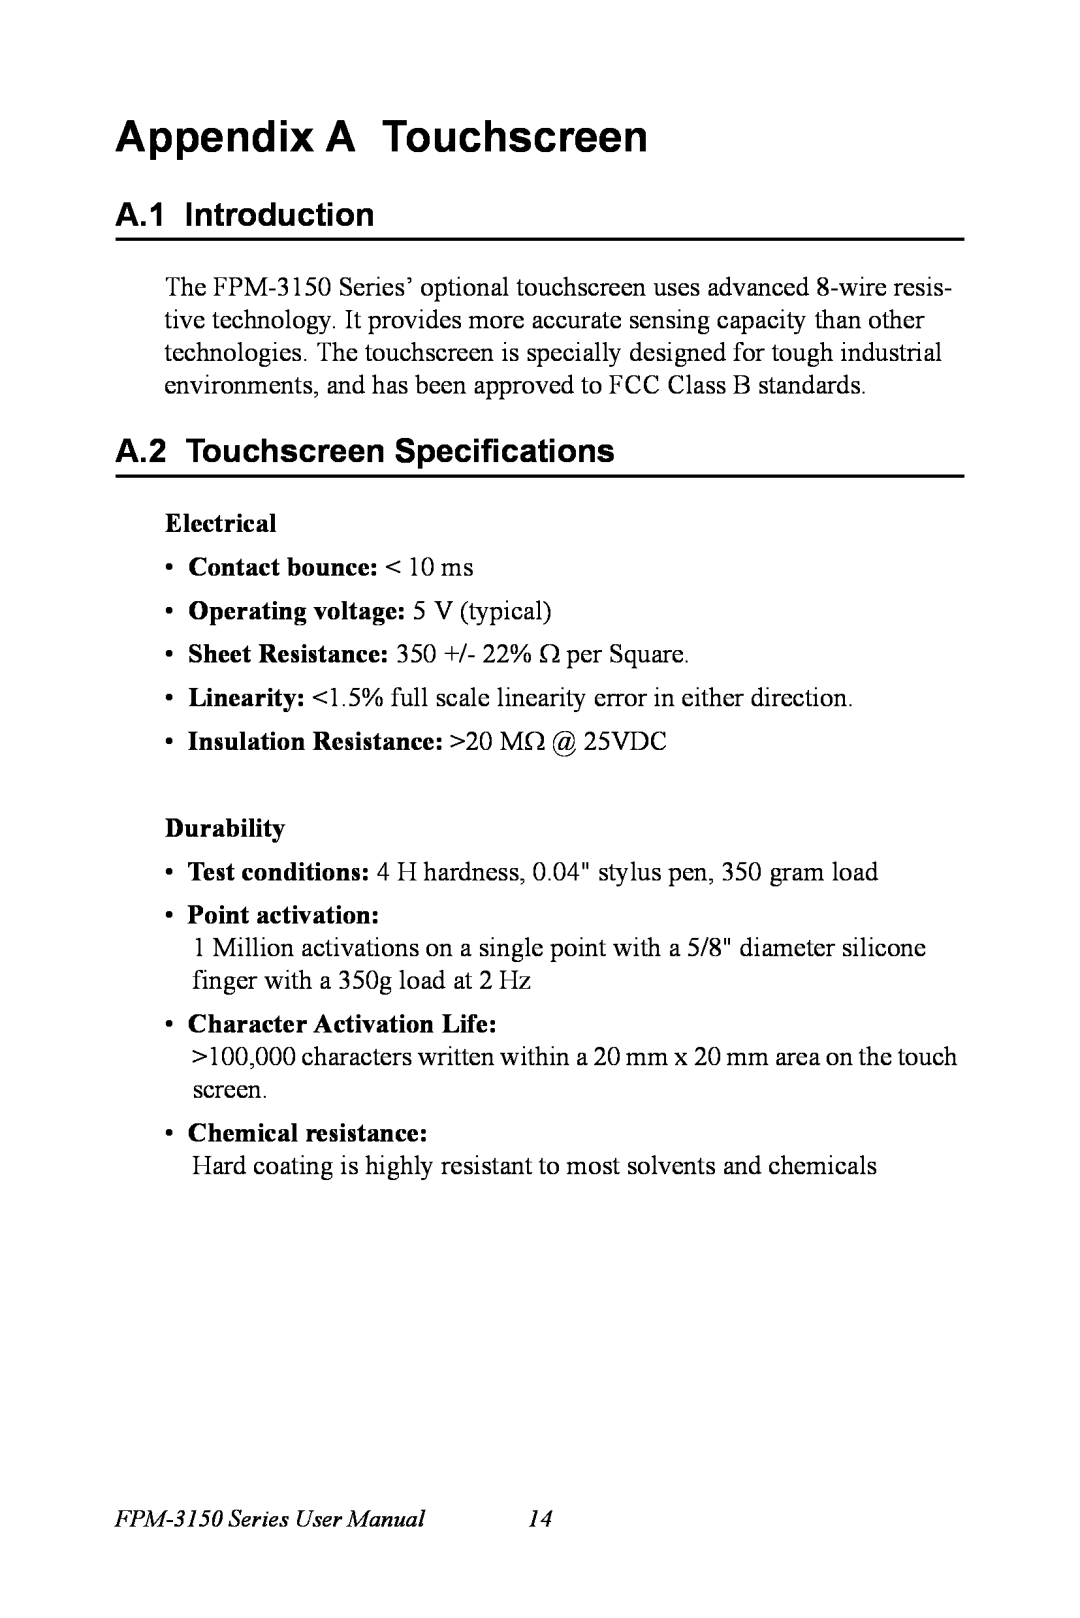 Advantech FPM-3150 Series Appendix A Touchscreen, A.1 Introduction, A.2 Touchscreen Specifications, Point activation 